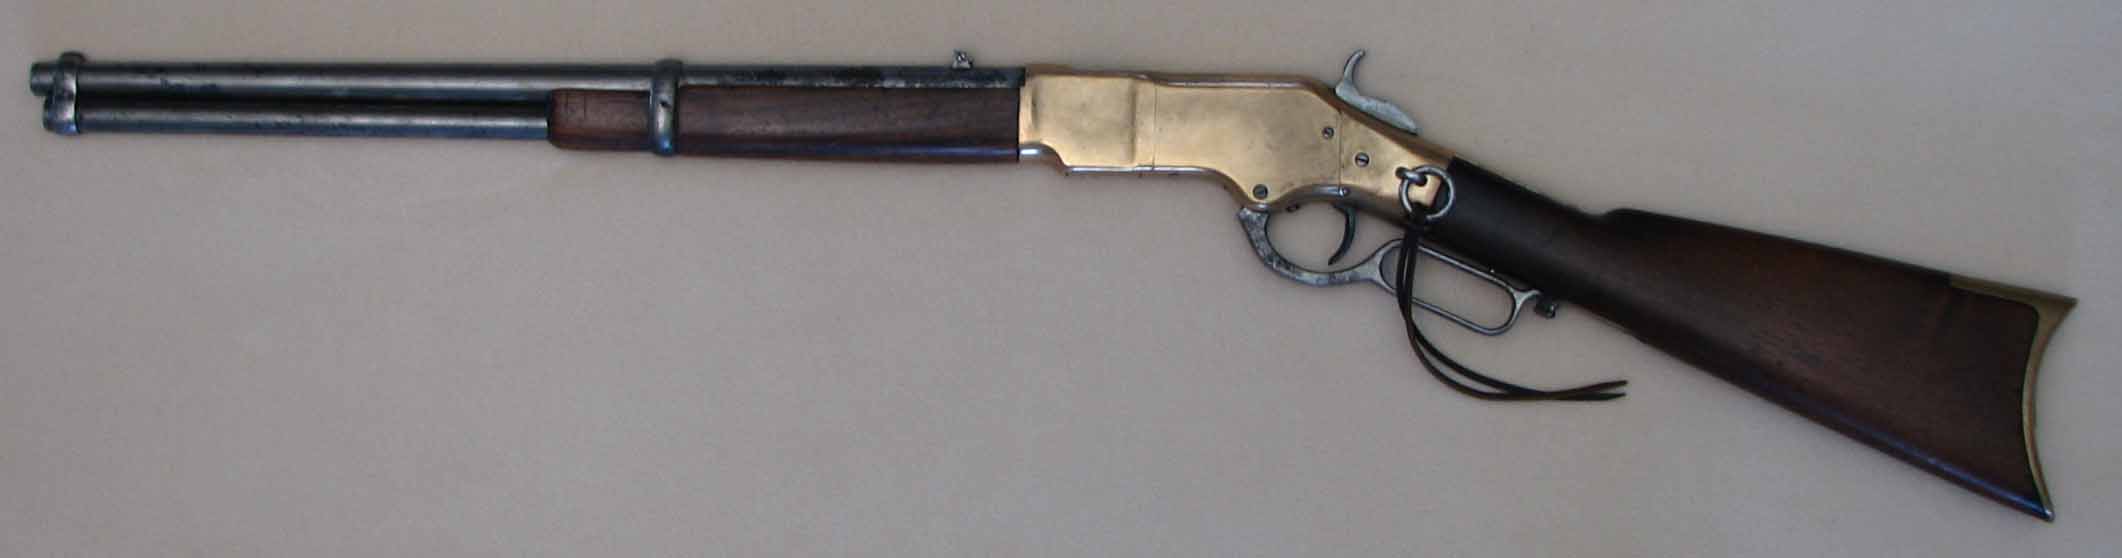 Model 1866 Winchester carbine - Week 9: February 26th thru March 4th